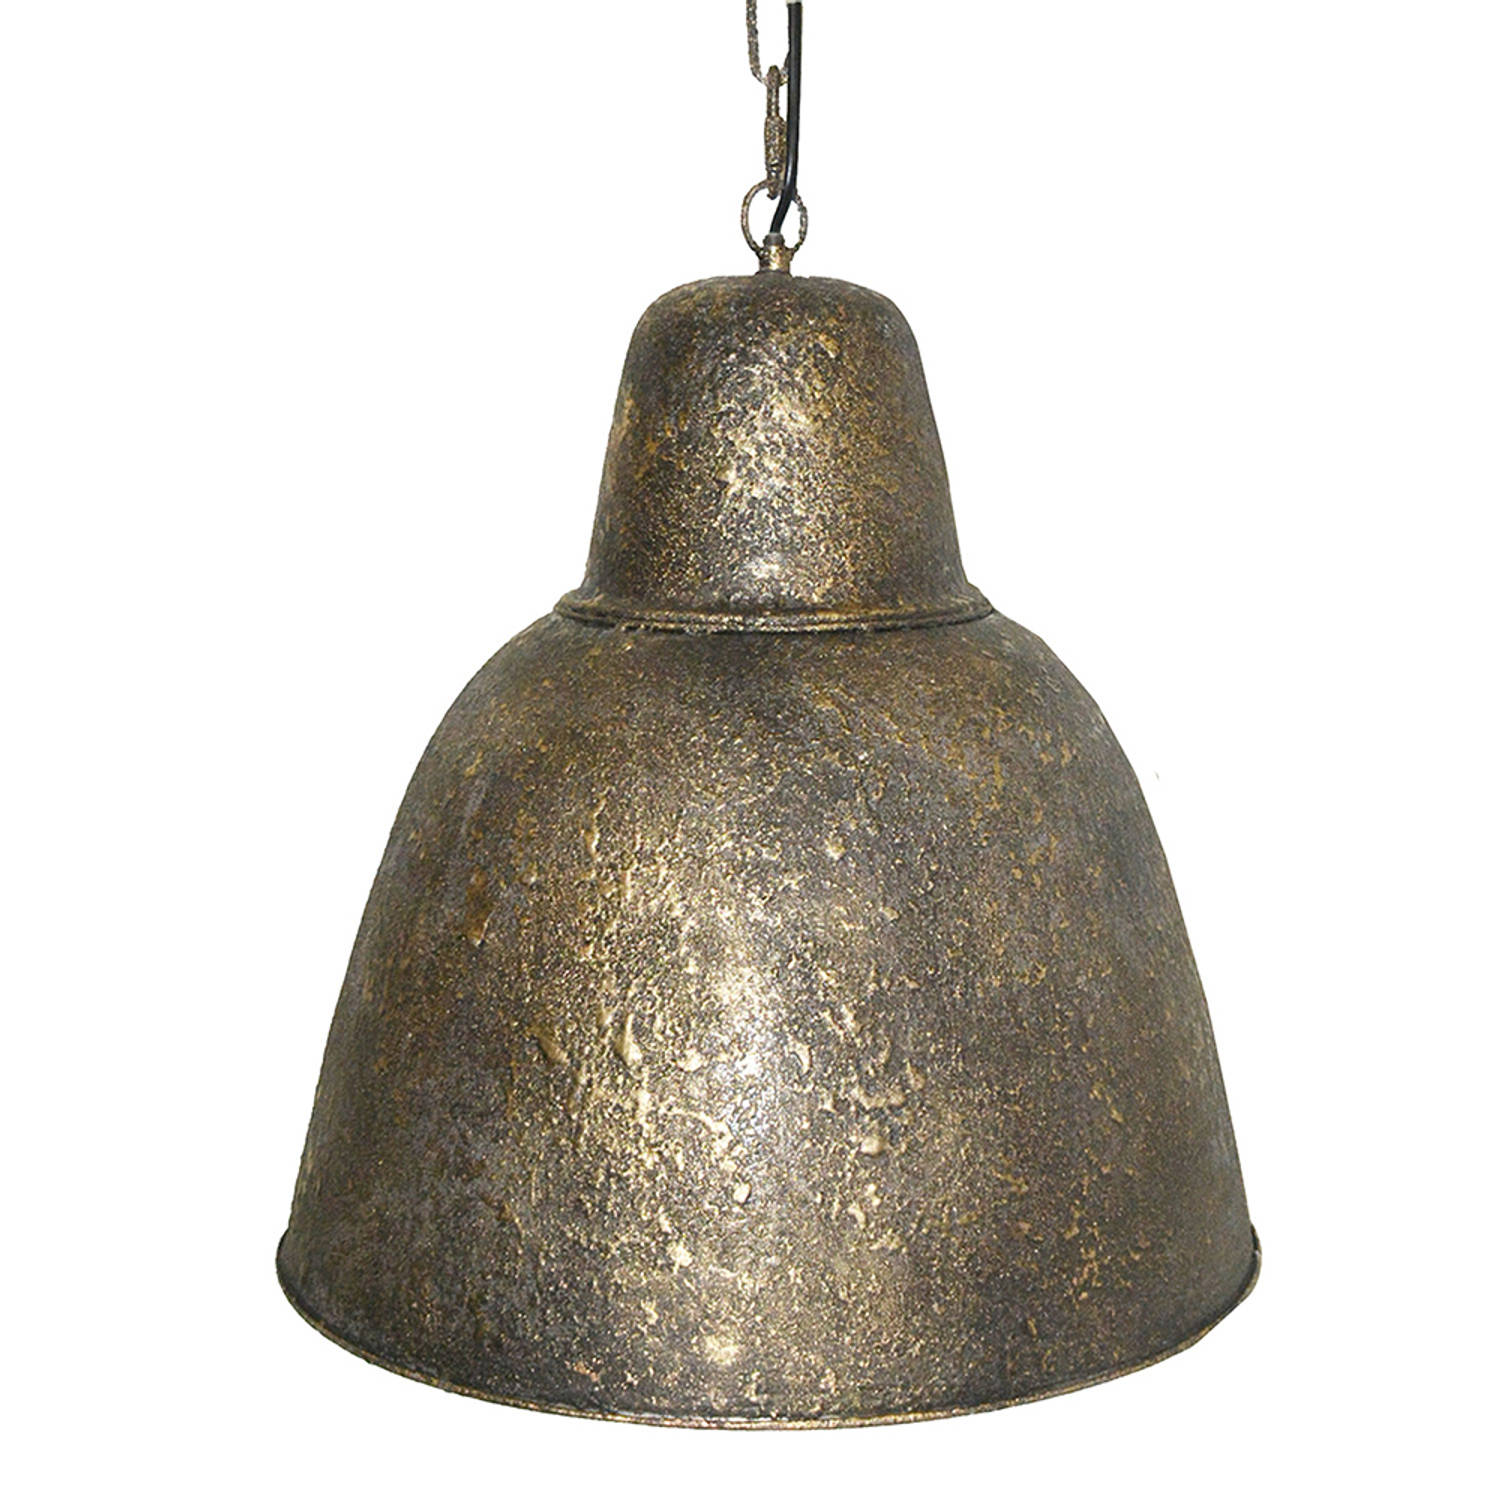 HAES DECO - Hanglamp - Industrial - Vintage / Retro Lamp, formaat Ø 40x44 cm - Goudkleurig / Bruin Metaal - Ronde Hanglamp Eettafel, Hanglamp Eetkamer